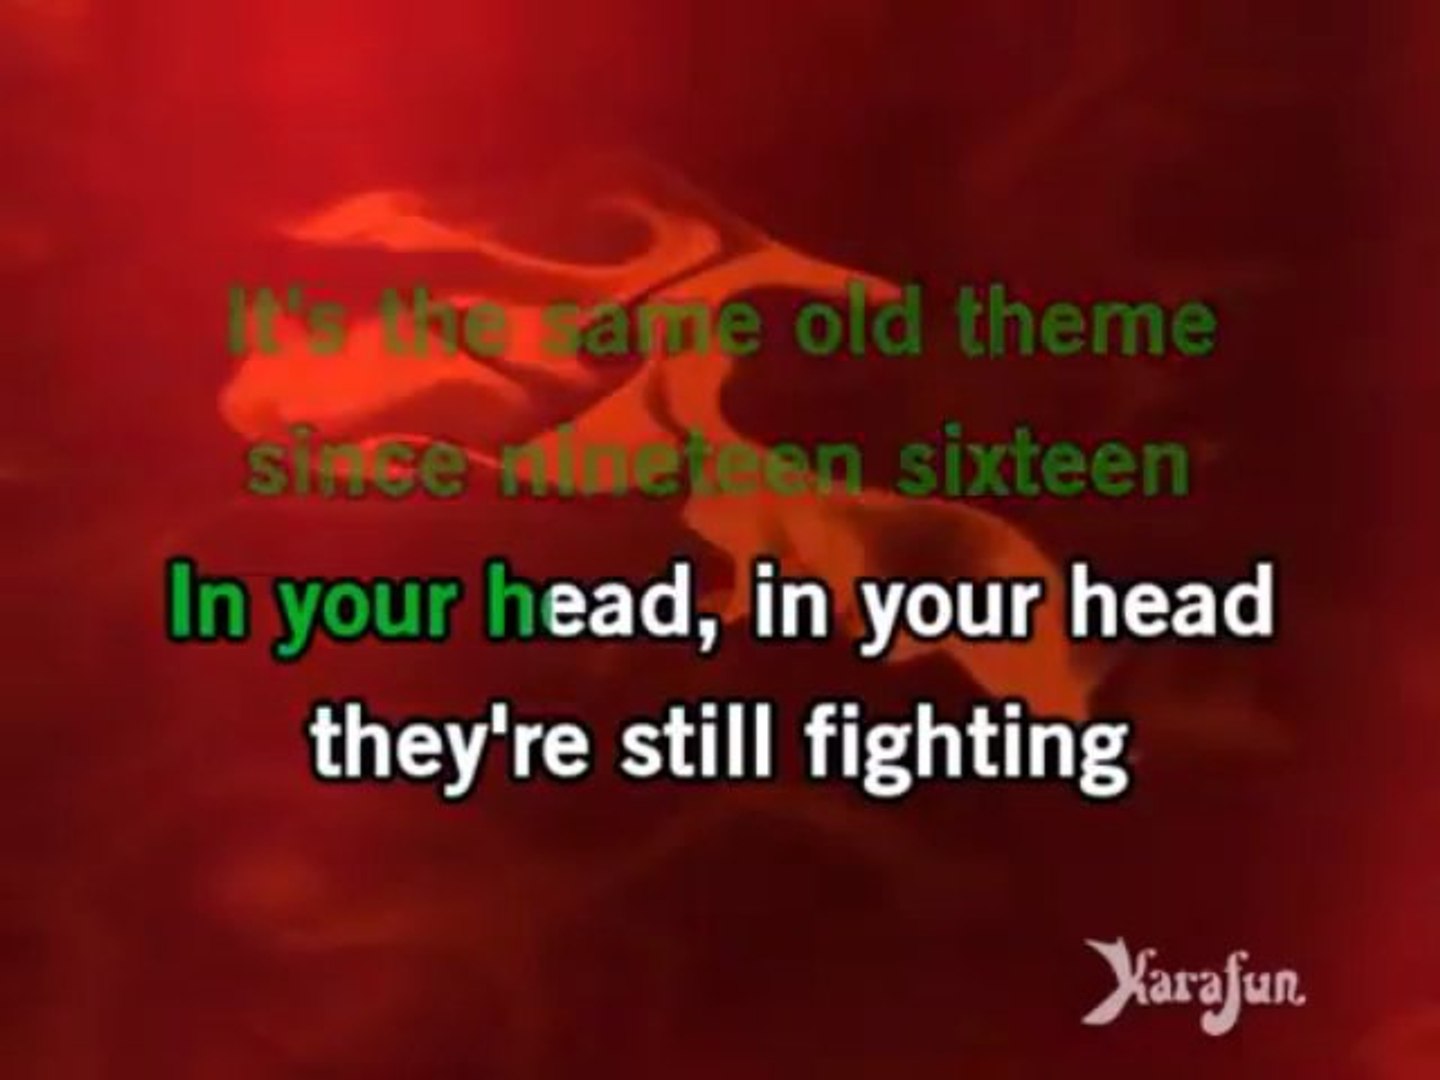 The Cranberries - Zombie Lyrics Version (KaraokeX) - video Dailymotion